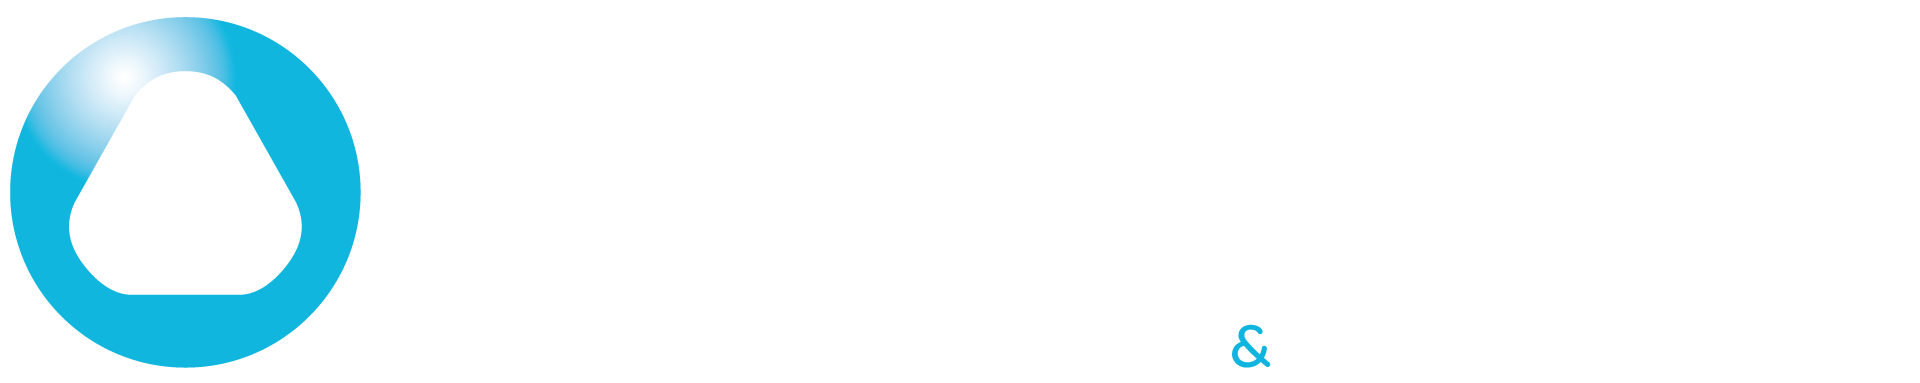 Globalbox Logo